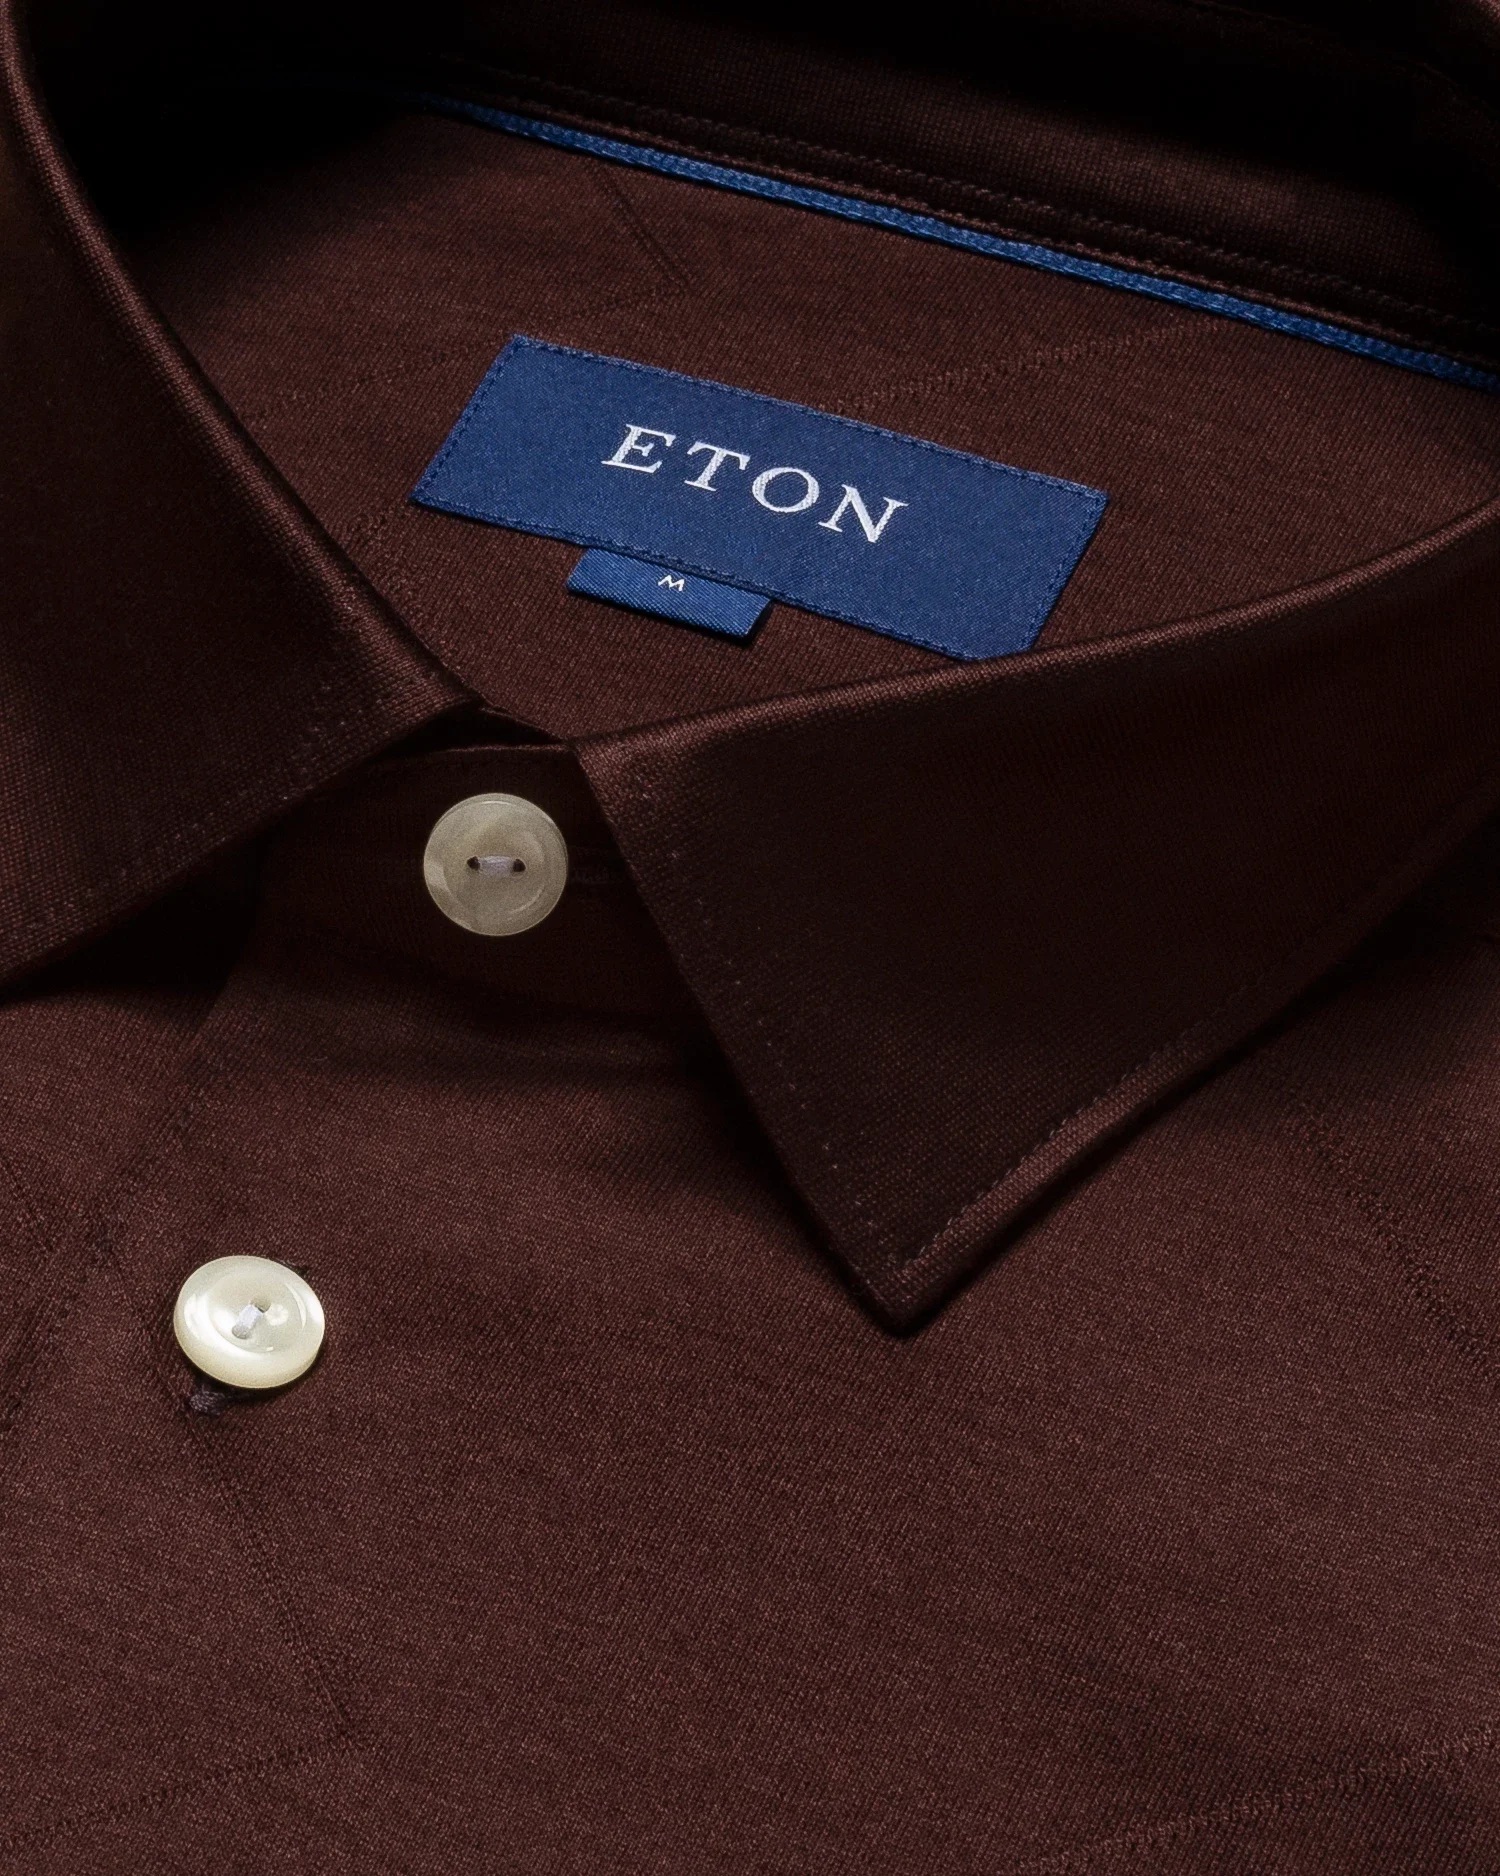 Eton - brown jersey shirt jacquard fil coupe